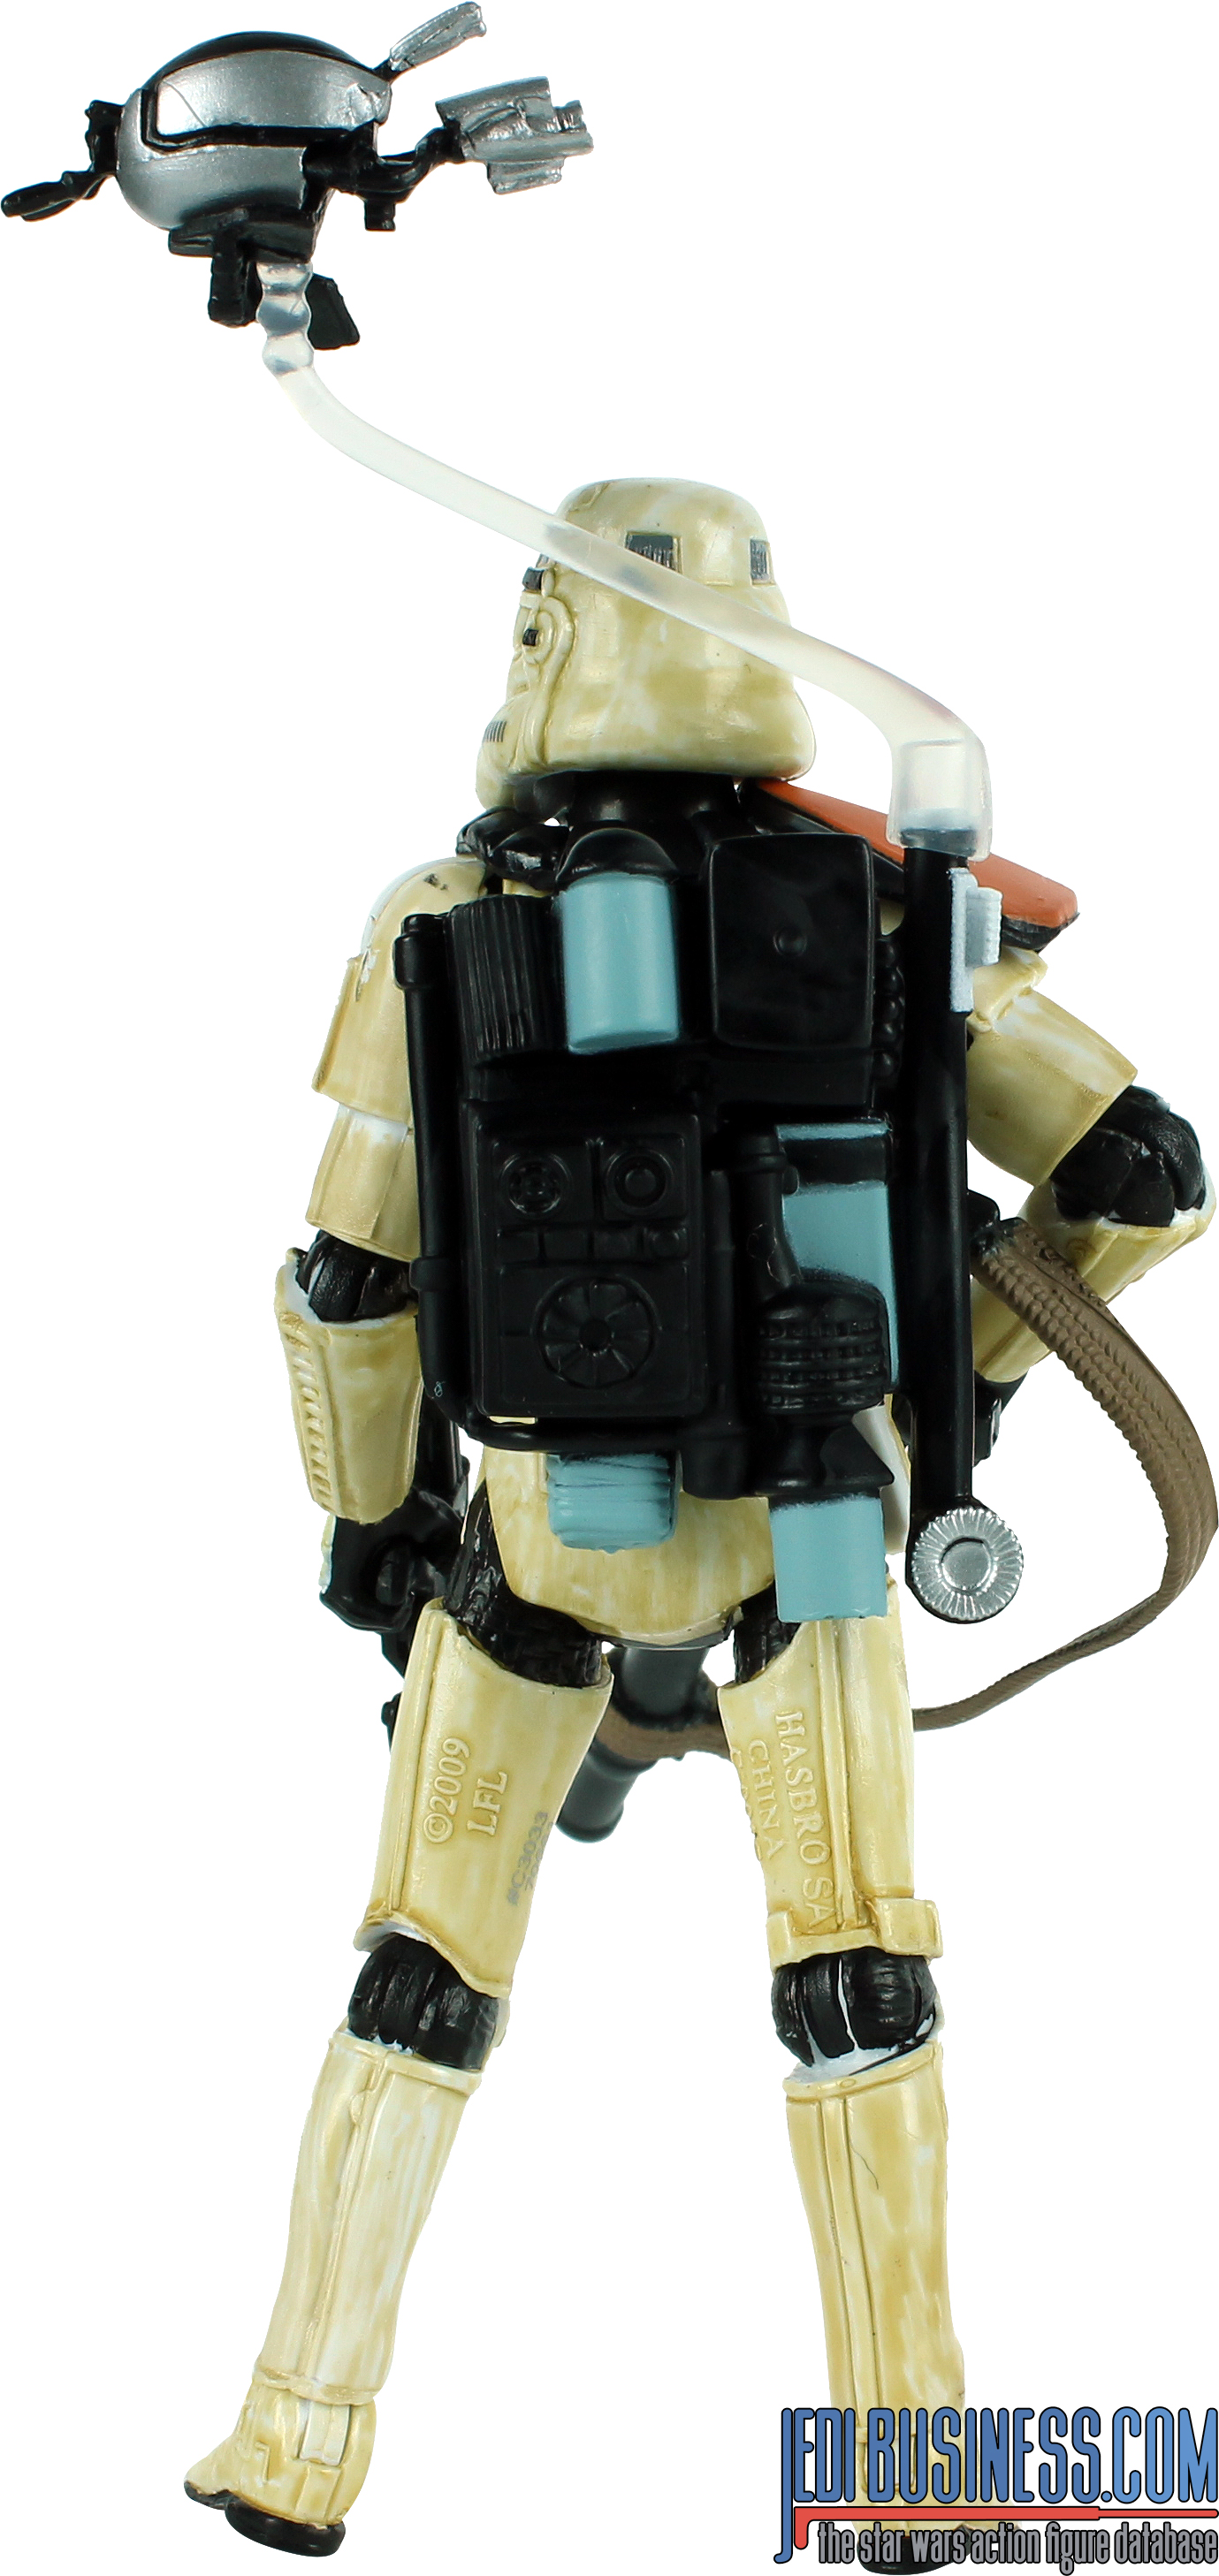 Sandtrooper With Sentry Droid Mark IV